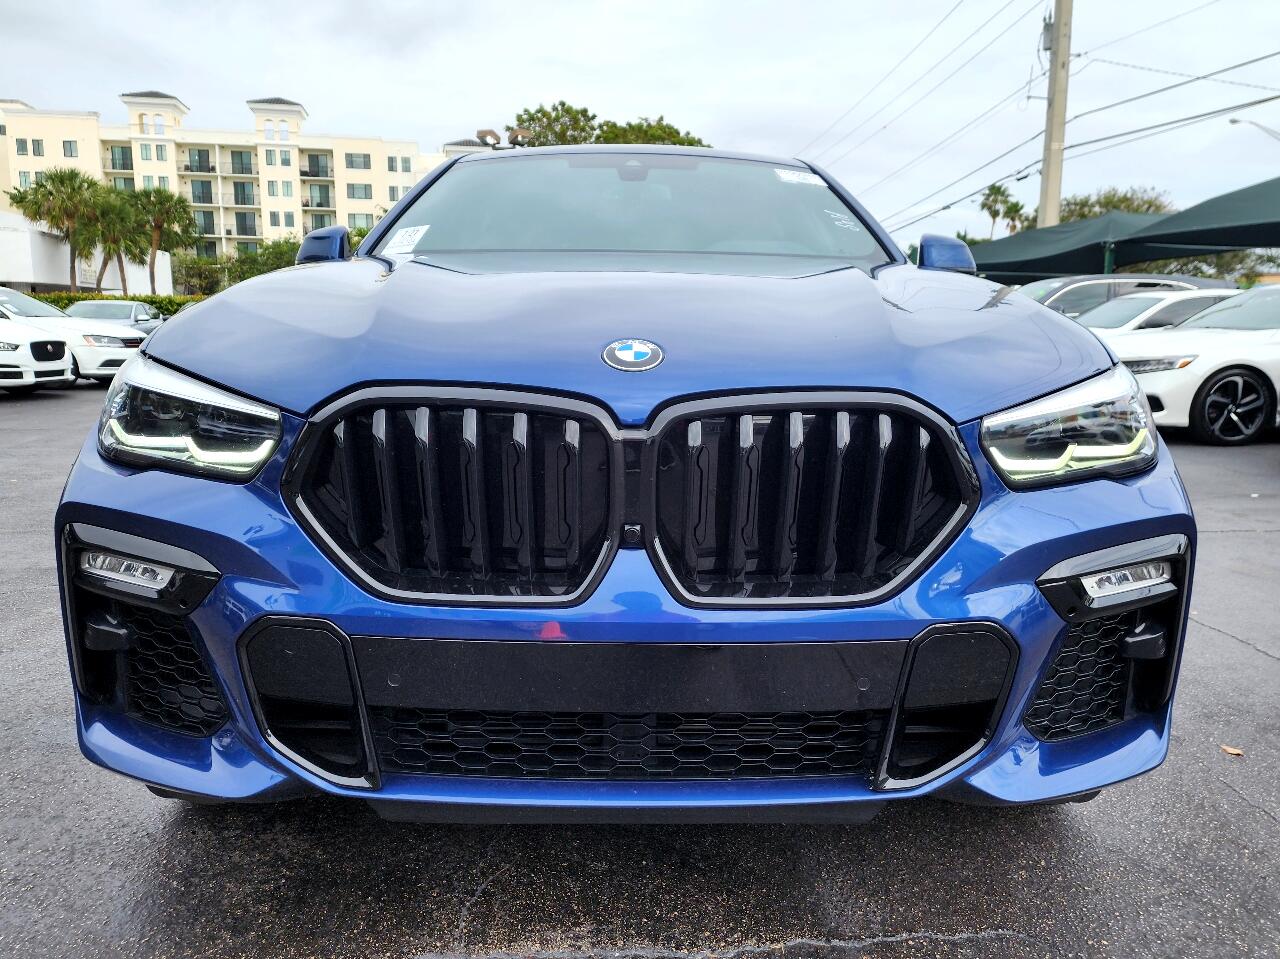 2021 BMW X6 SUV / Crossover - $59,999